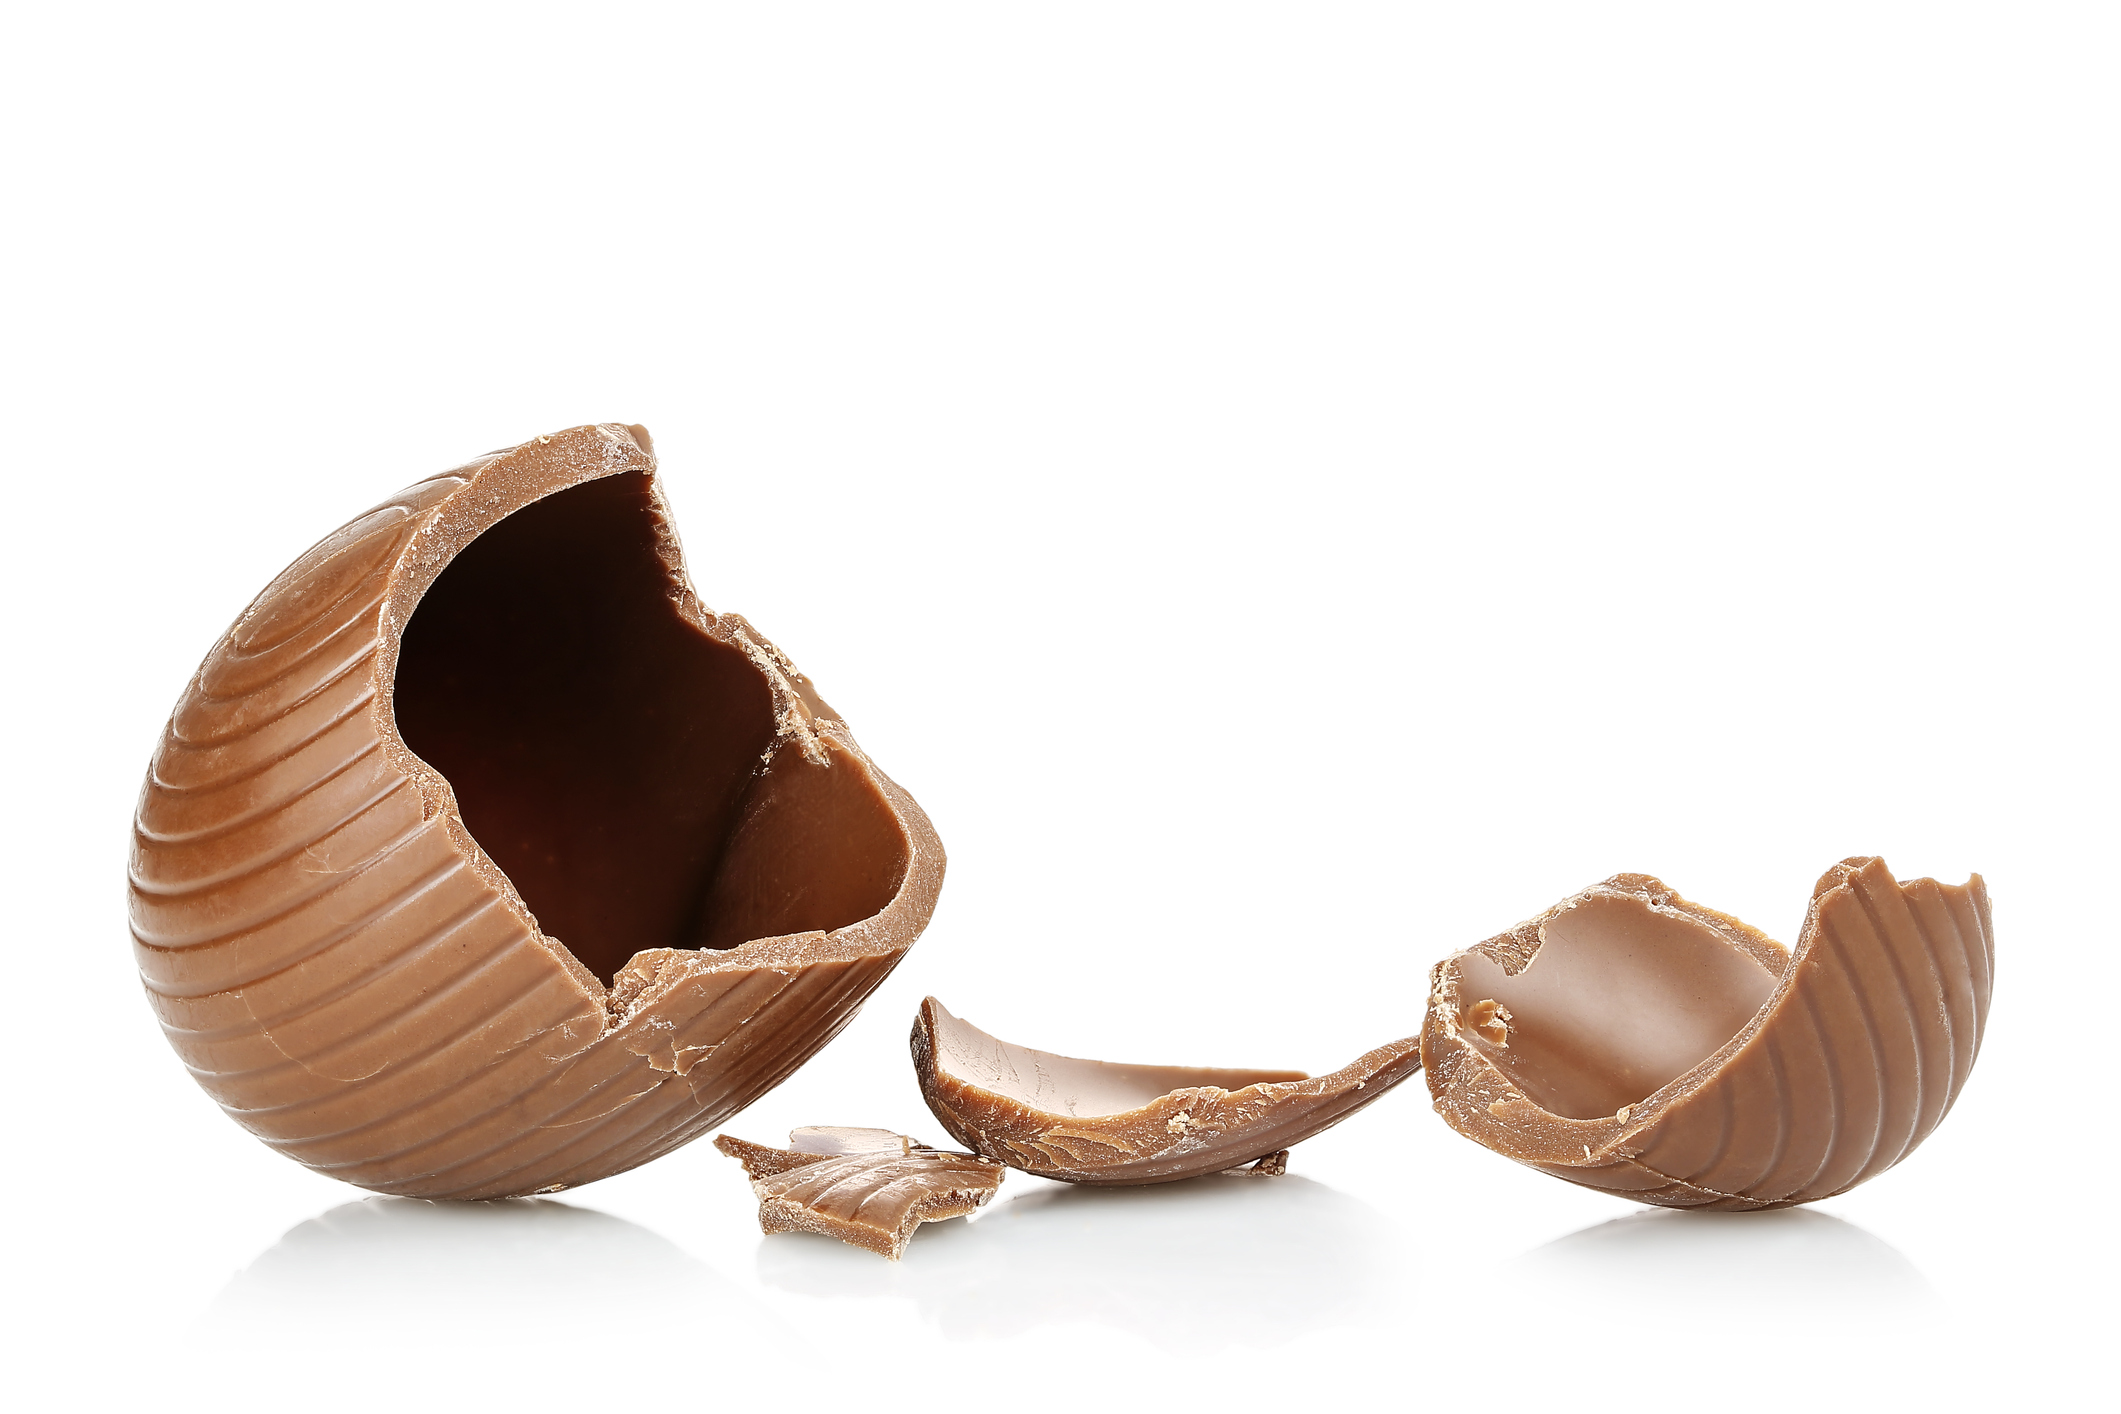 A smashed chocolate egg 